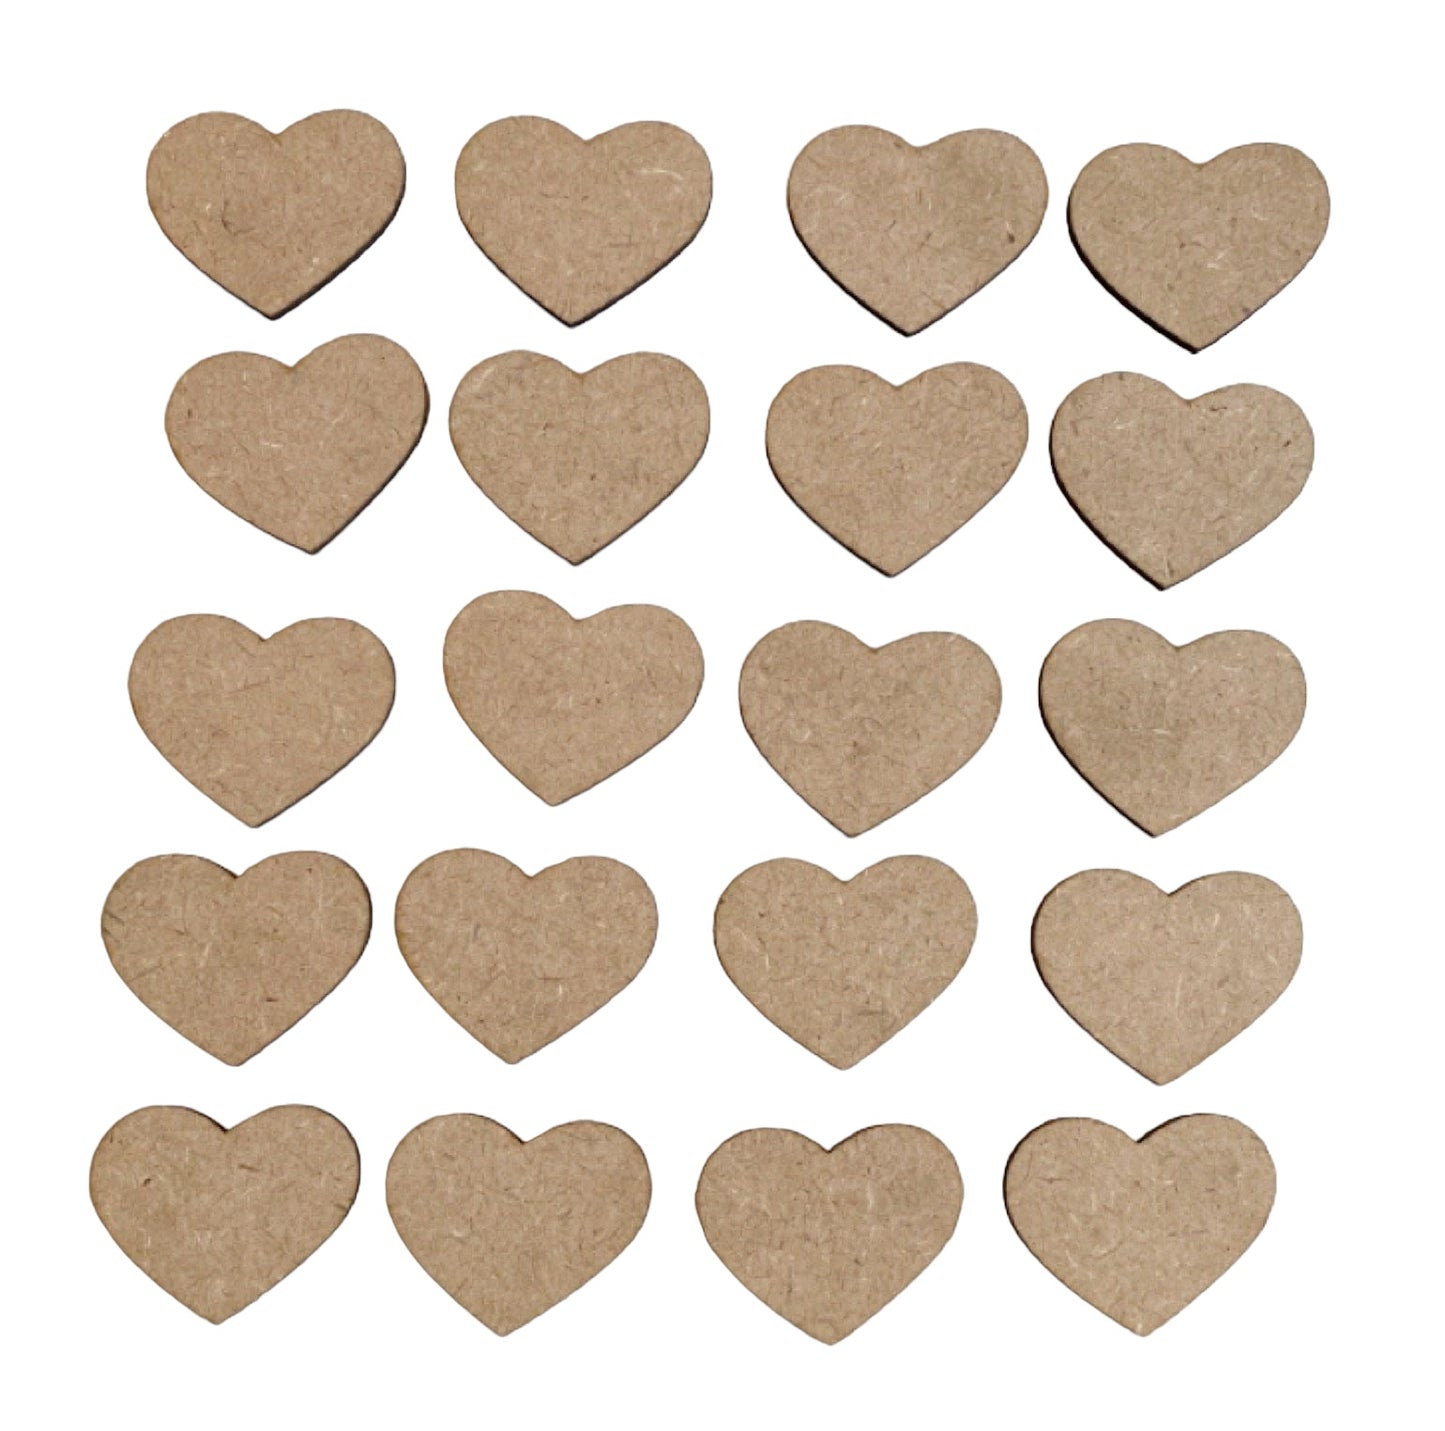 Heart Love Hearts Art Craft Mosaic Wooden MDF DIY